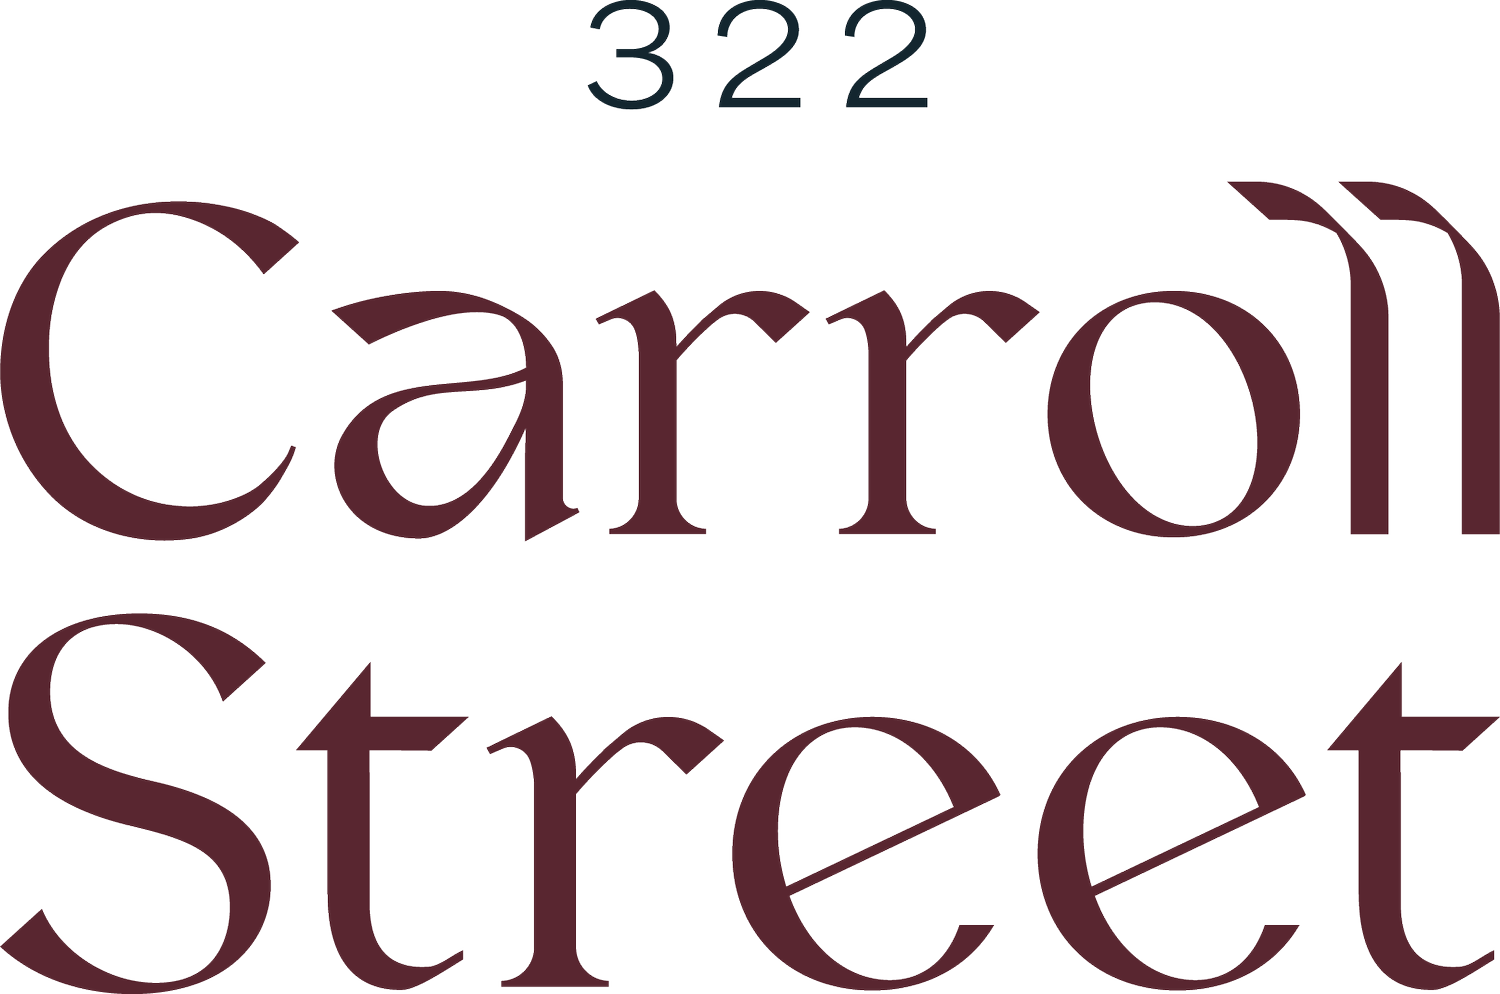 322 Carroll Street